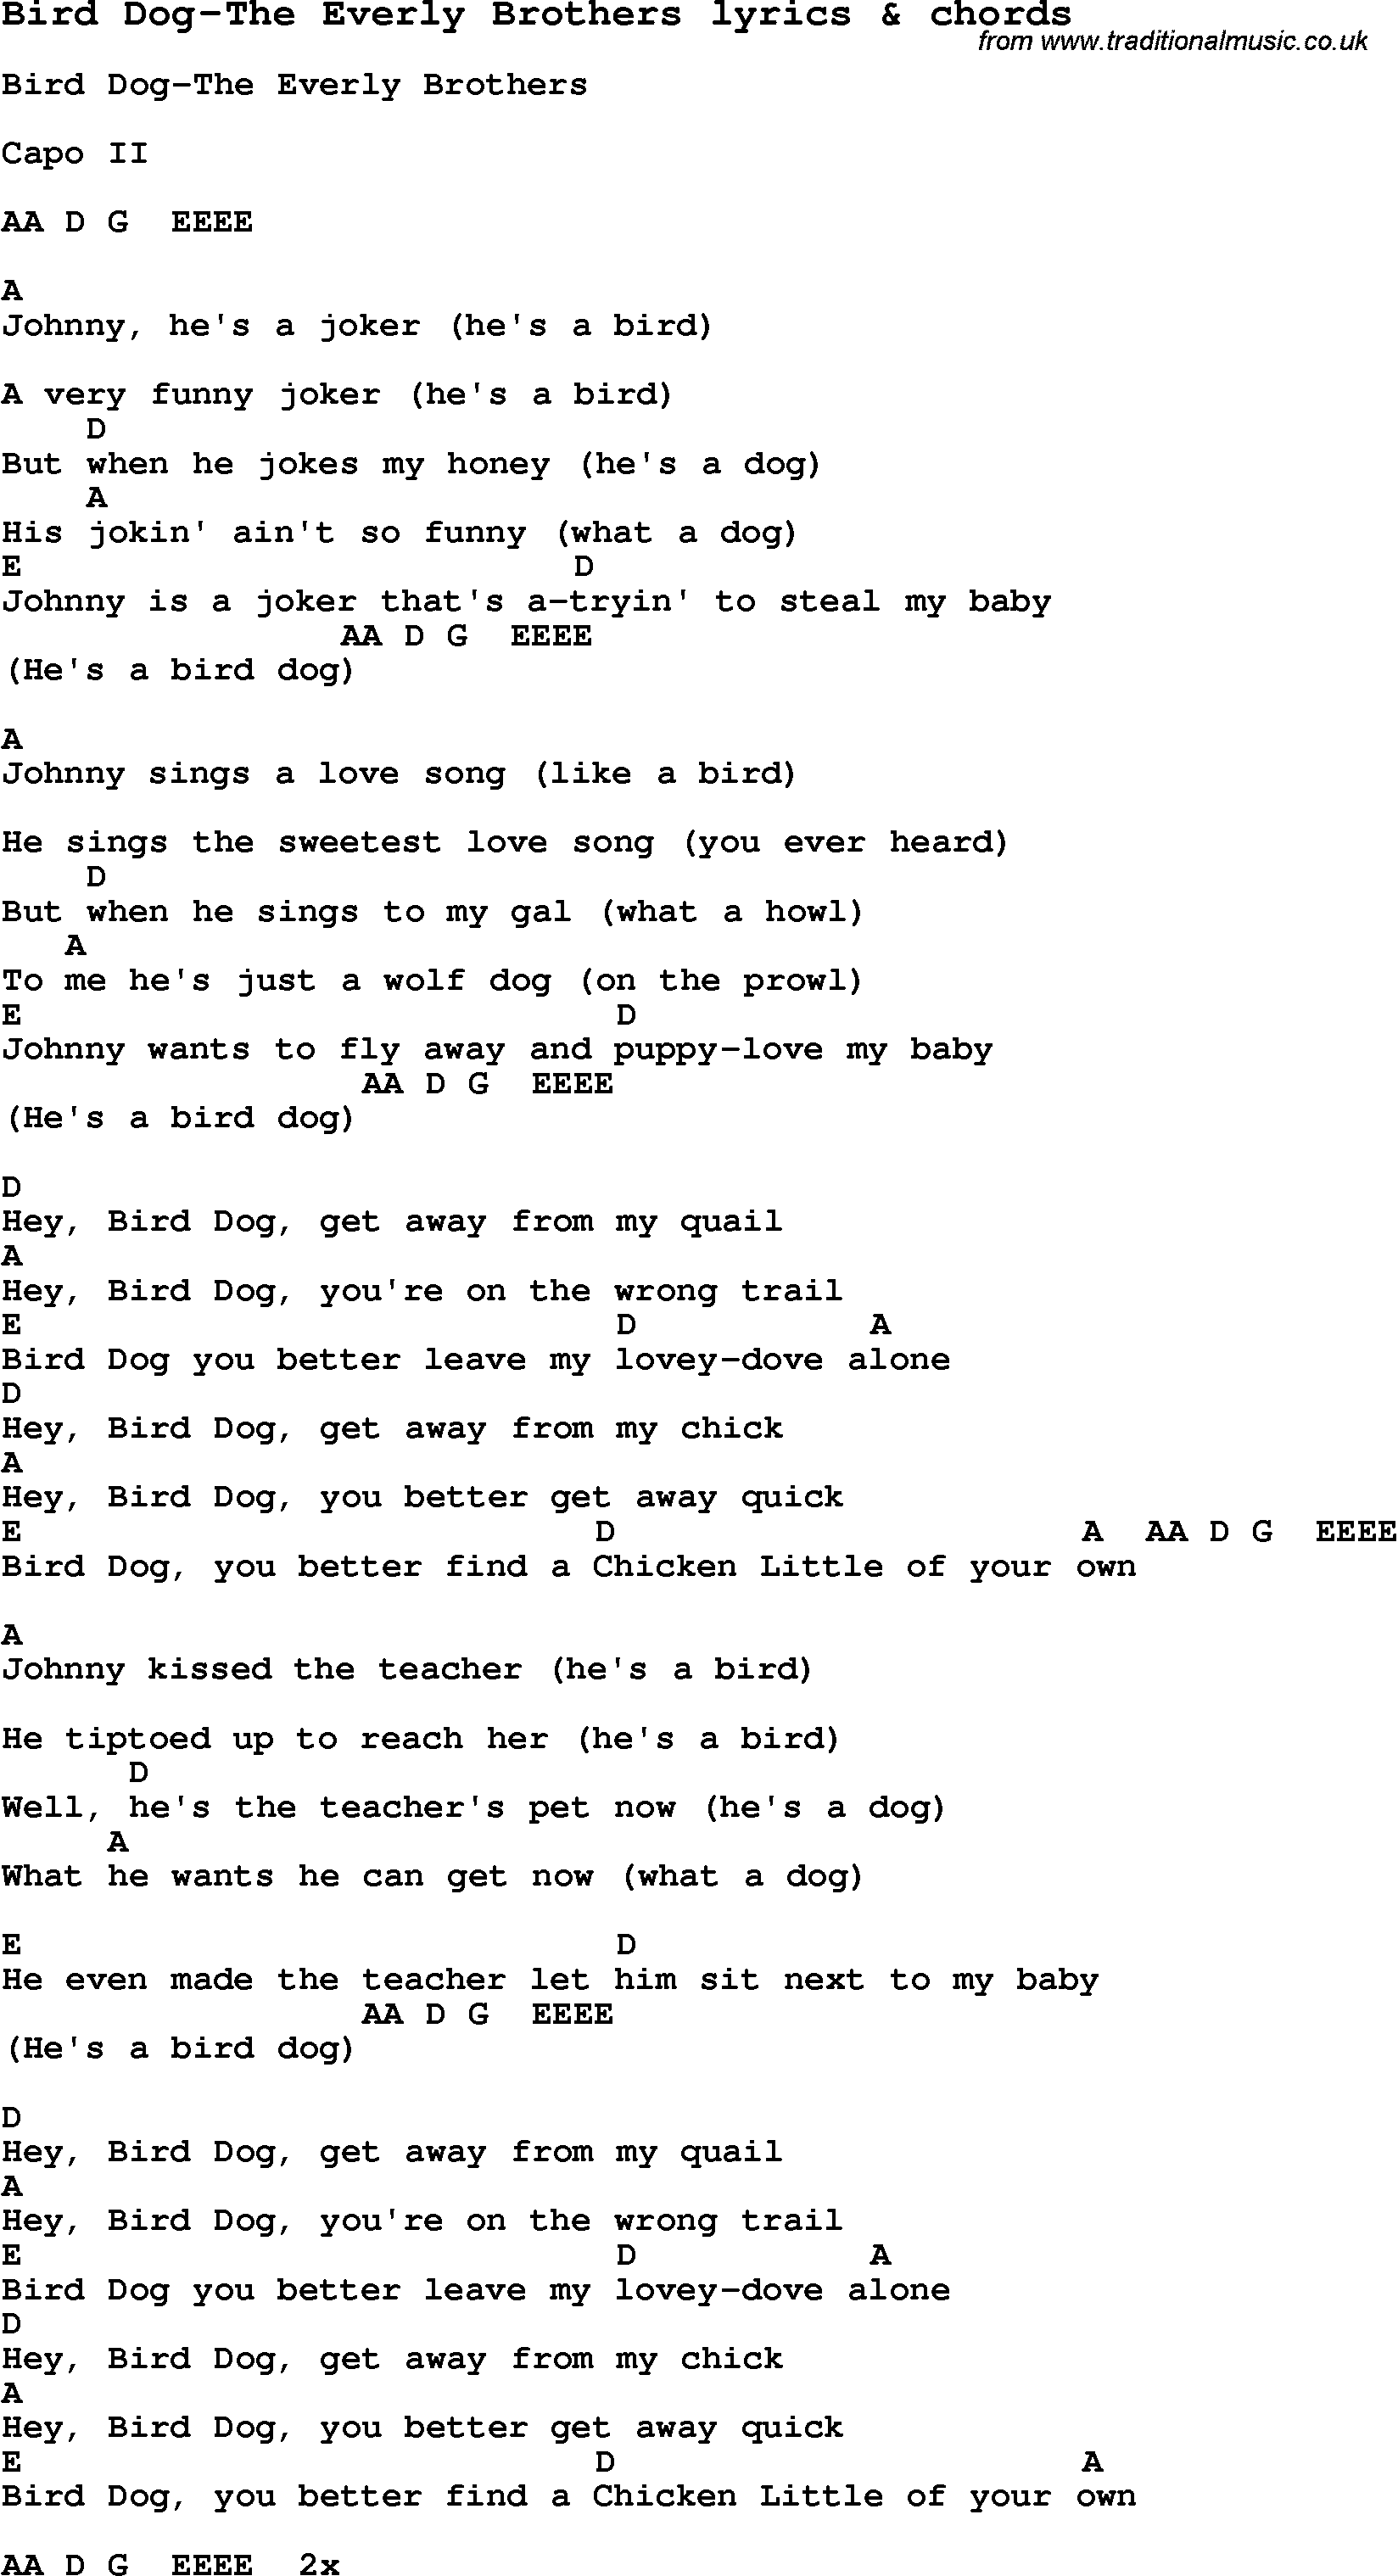 Love Song Lyrics for: Bird Dog-The Everly Brothers with chords for Ukulele, Guitar Banjo etc.